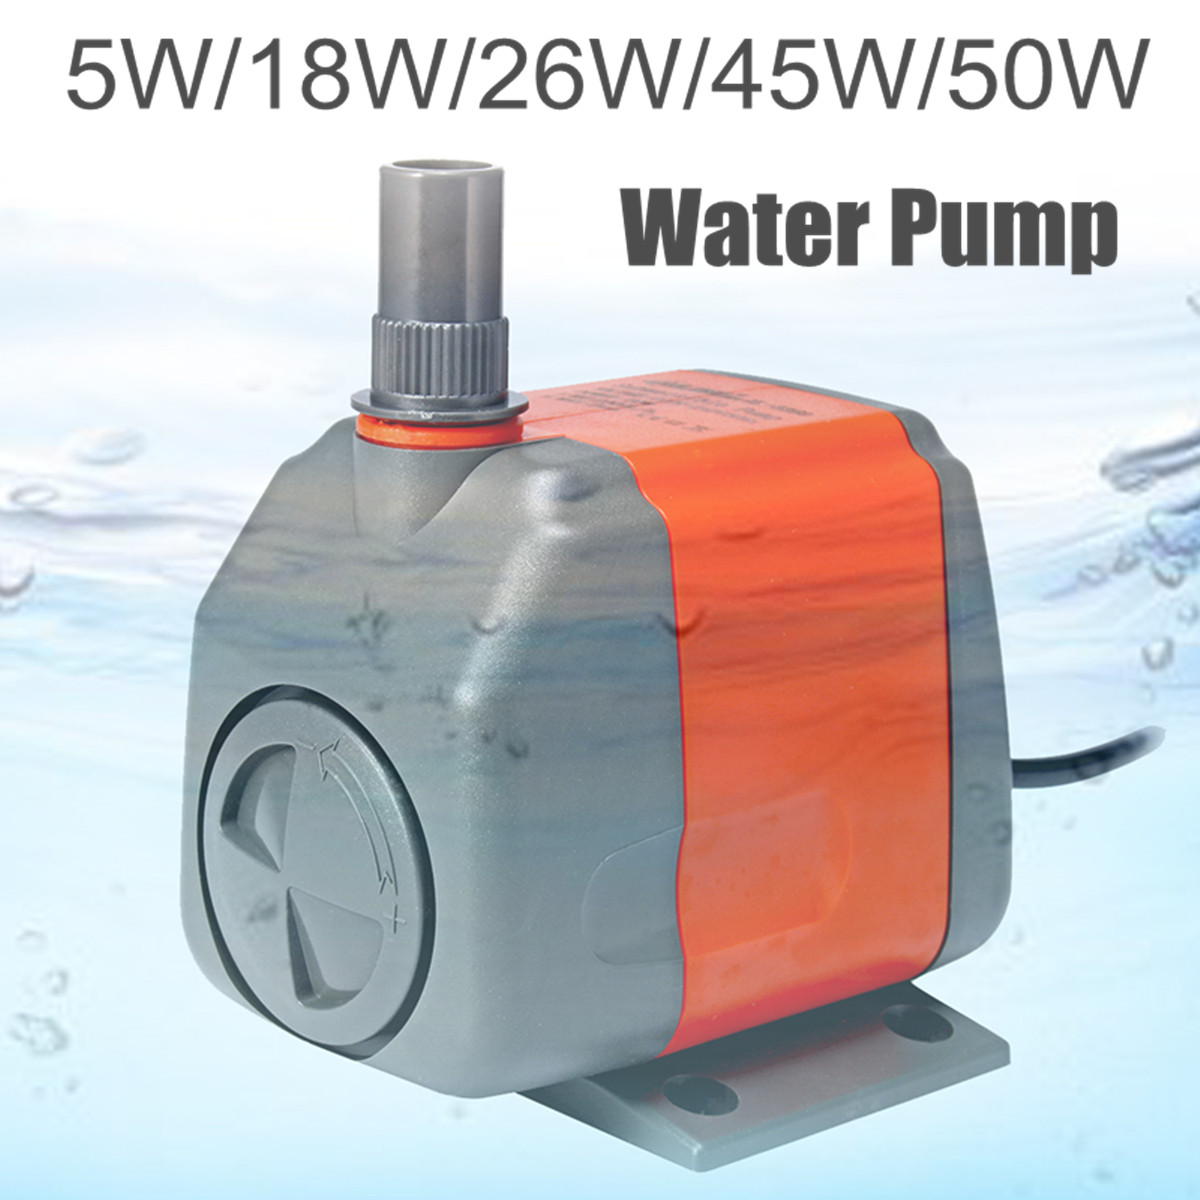 Submersible-Pump-Ultra-Quiet-Water-Pump-Fountain-Pump-for-Fish-Tank-Aquarium-5W18W26W45W50W-1335662-1